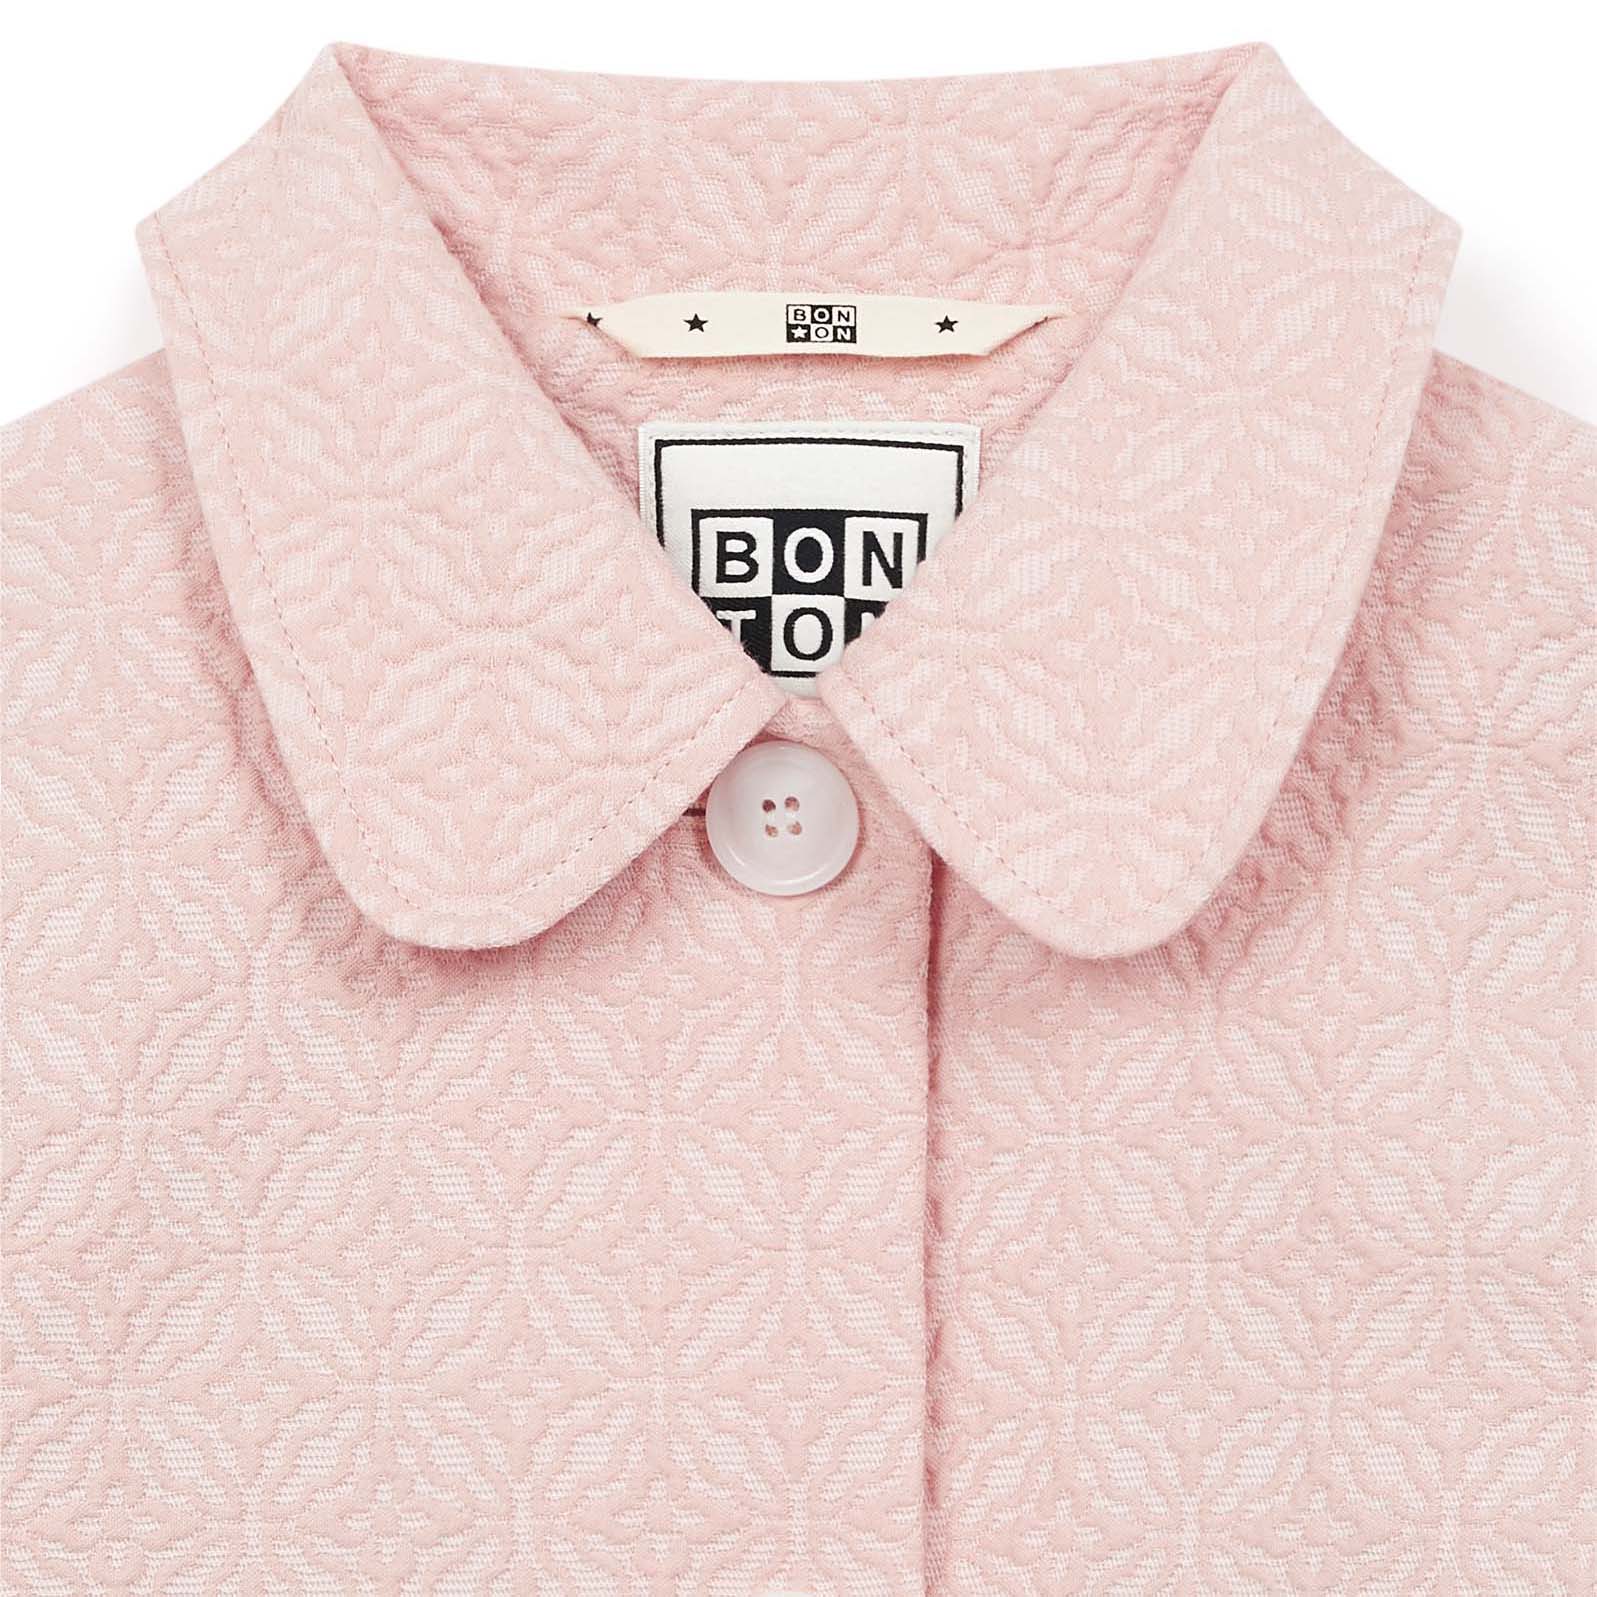 Girls Pink Cotton Coat